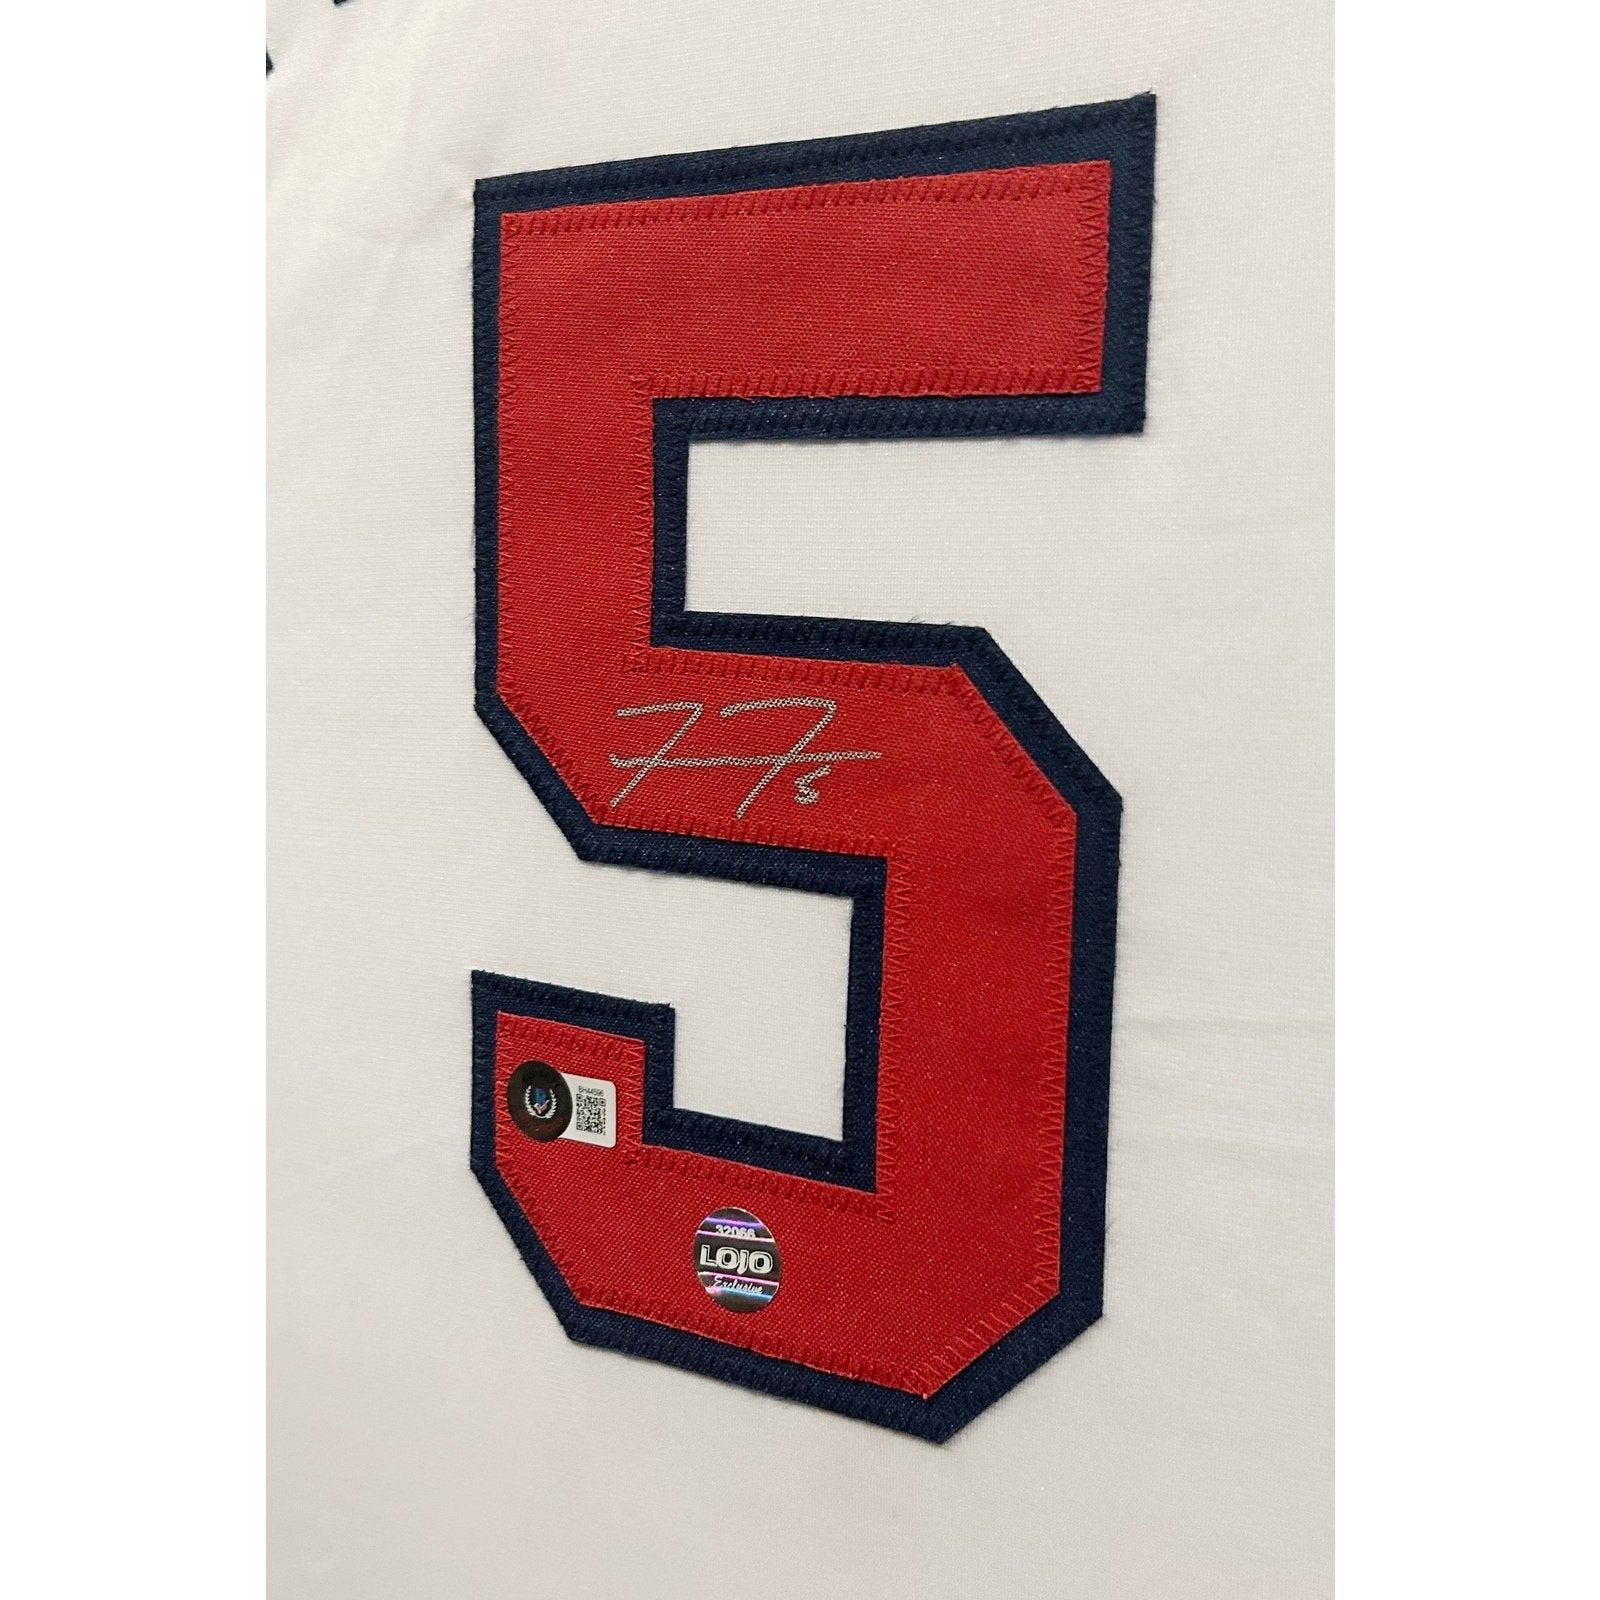 Freddie Freeman Framed Jersey Autographed Signed Beckett COA Atlanta Braves